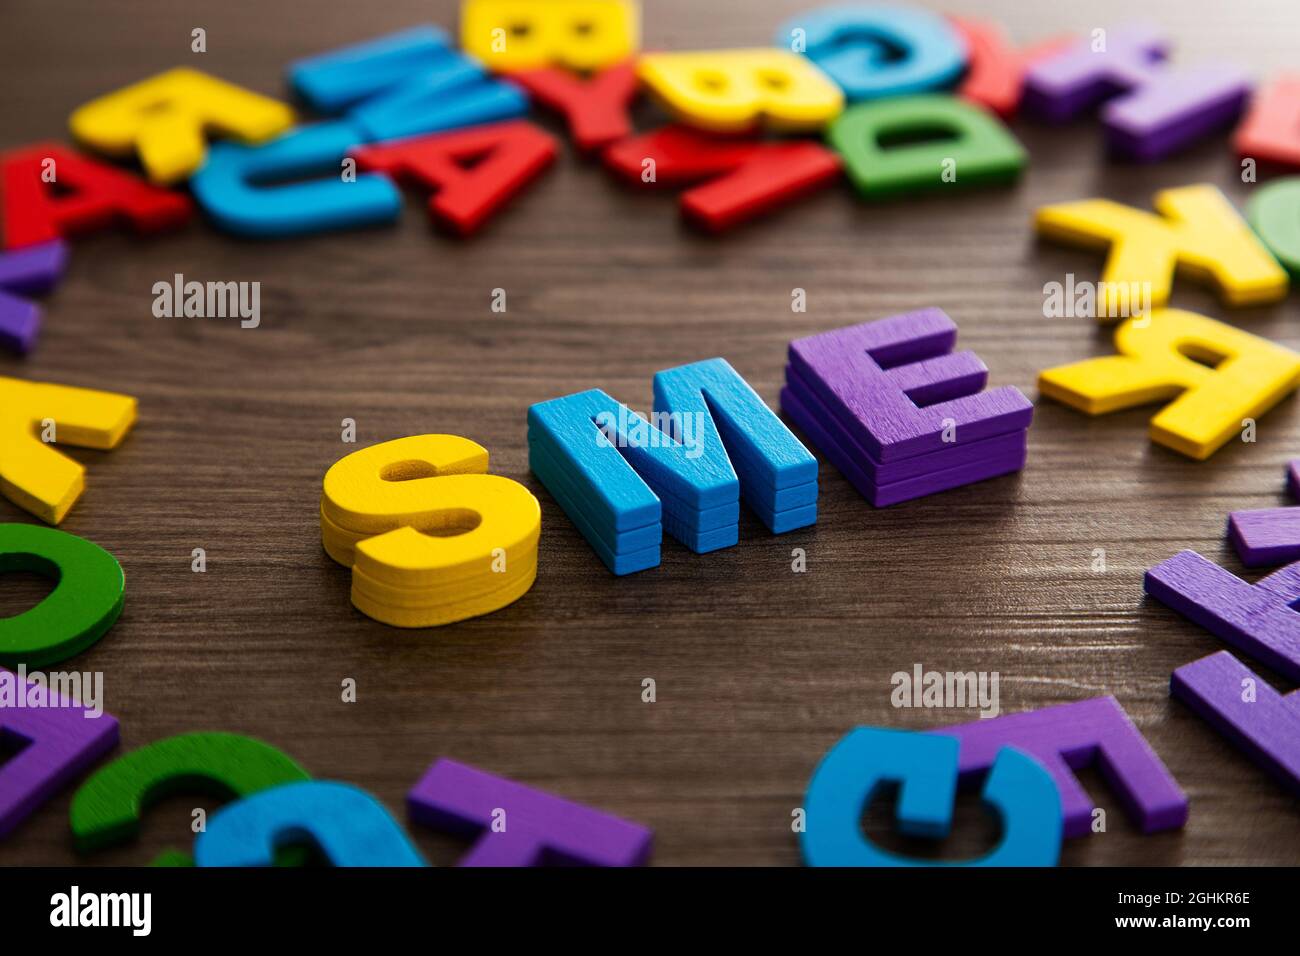 SME Small and Medium-sized Enterprises Concept. SME Small and Medium-sized Enterprises Concept. Business model. Key to success. Stock Photo